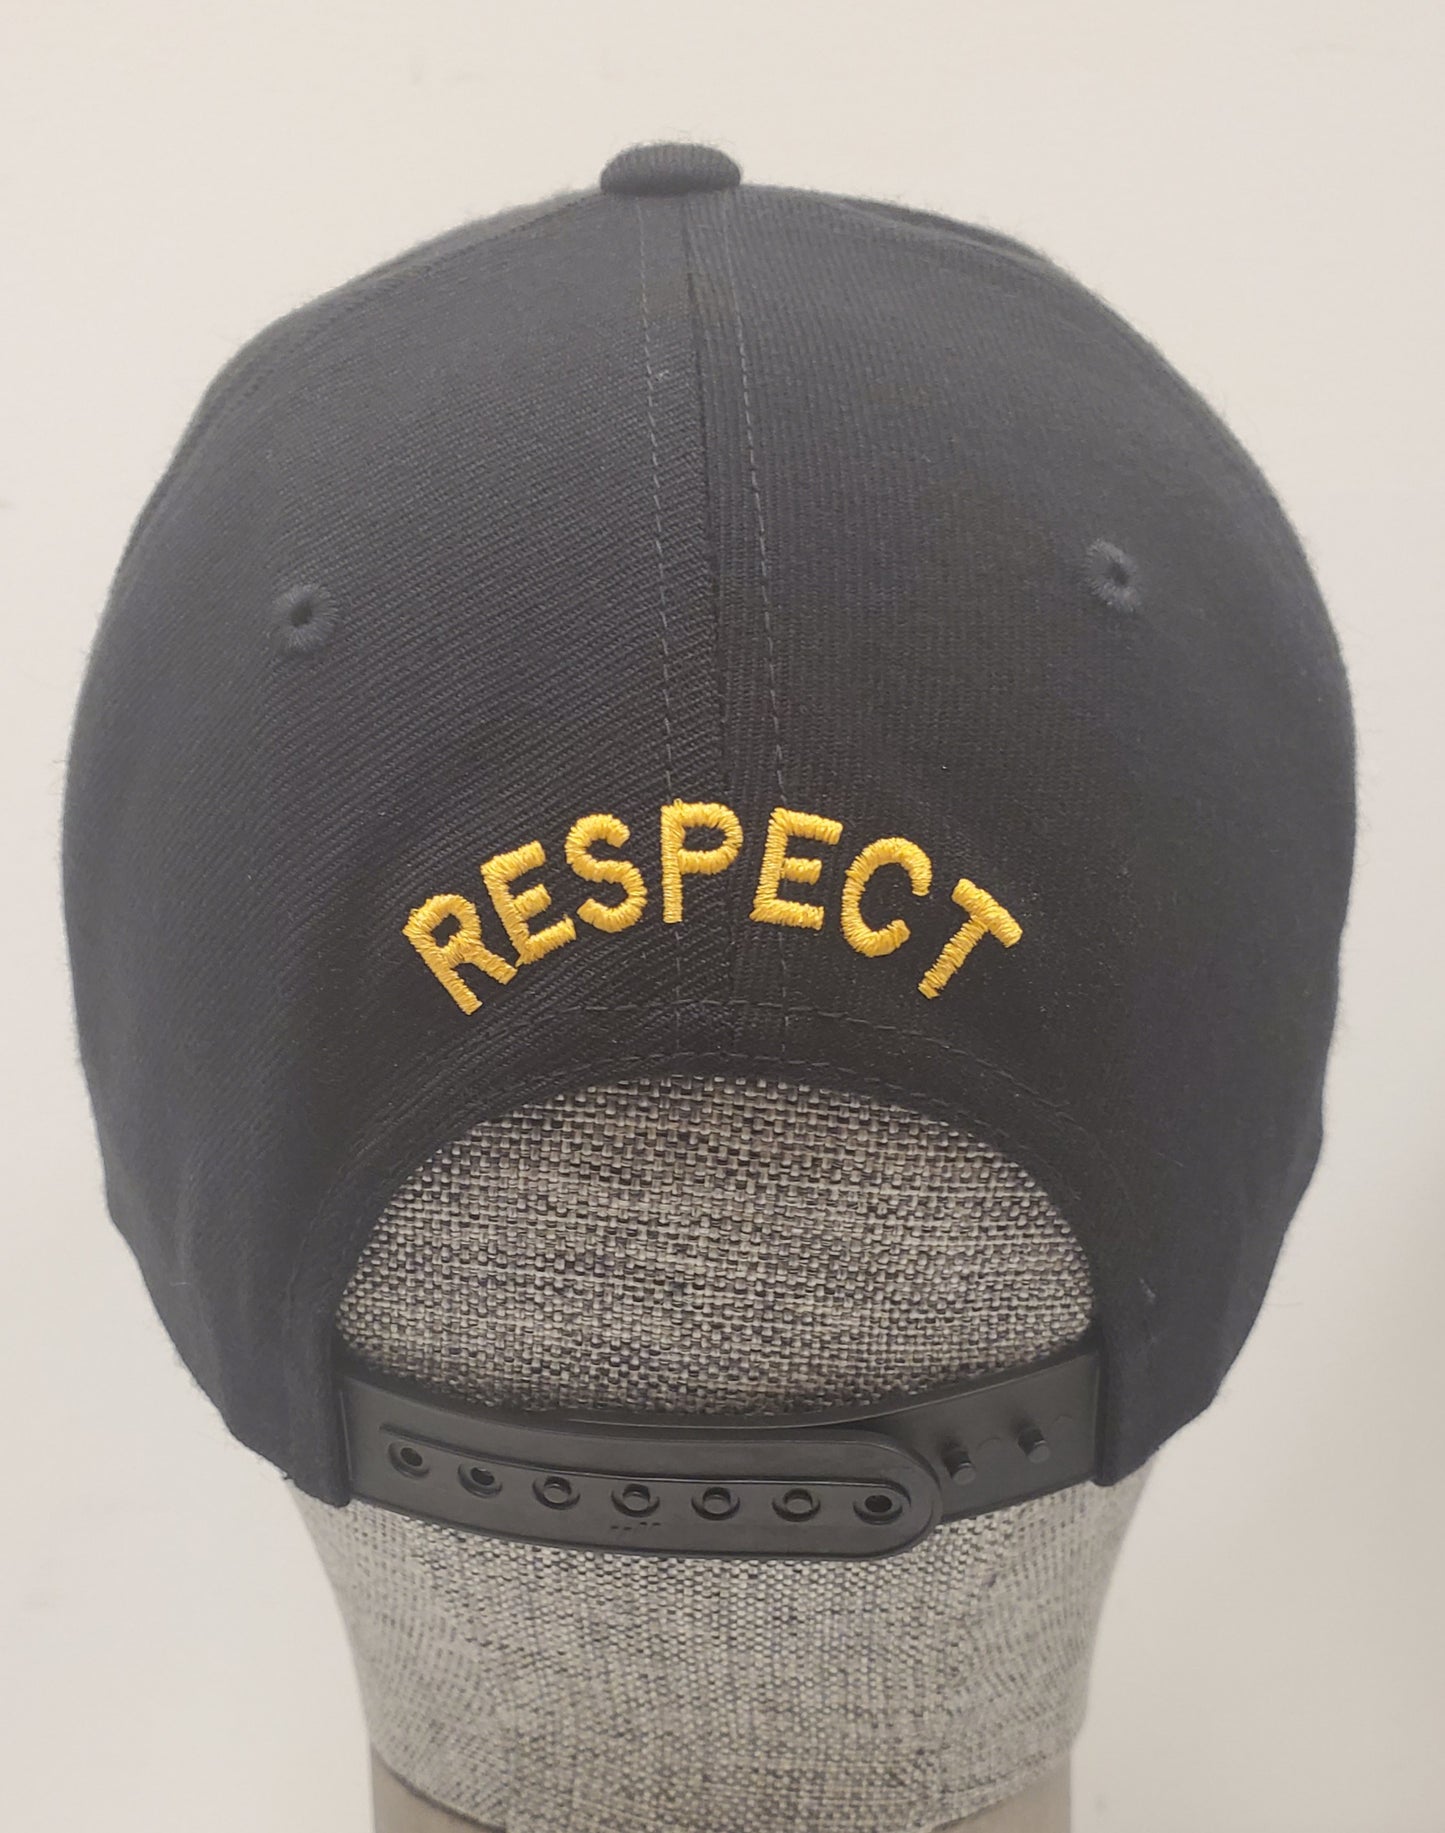 LeBron James "RESPECT" Snapback Hat